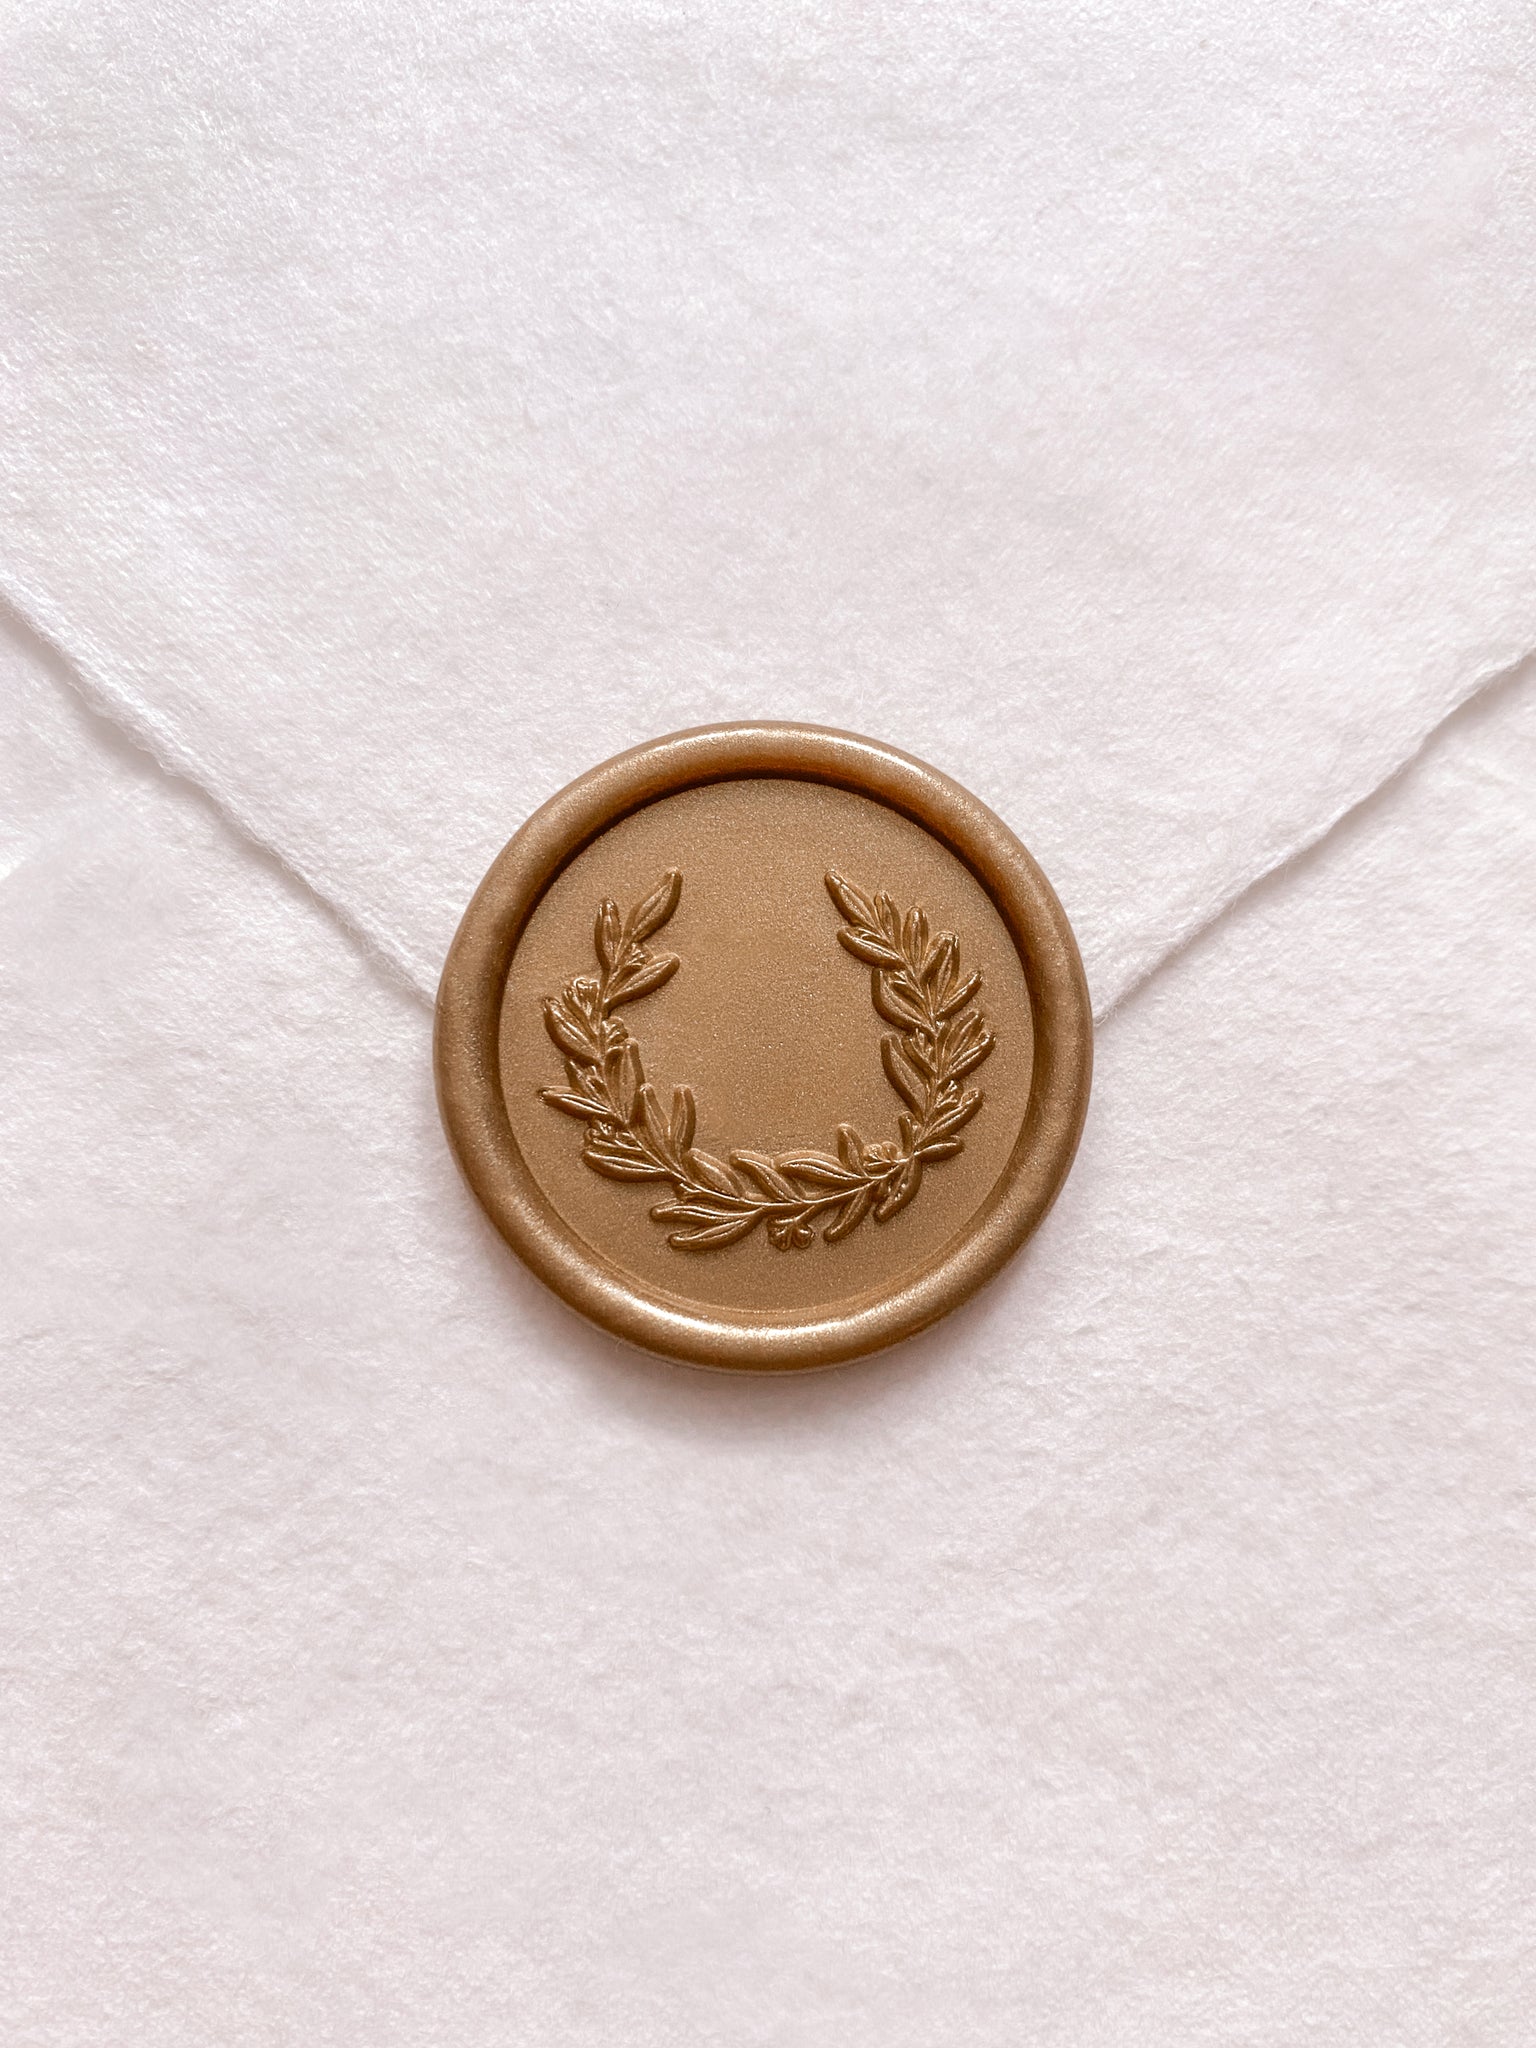 Garden wreath design wax seal in gold on handmade paper envelope